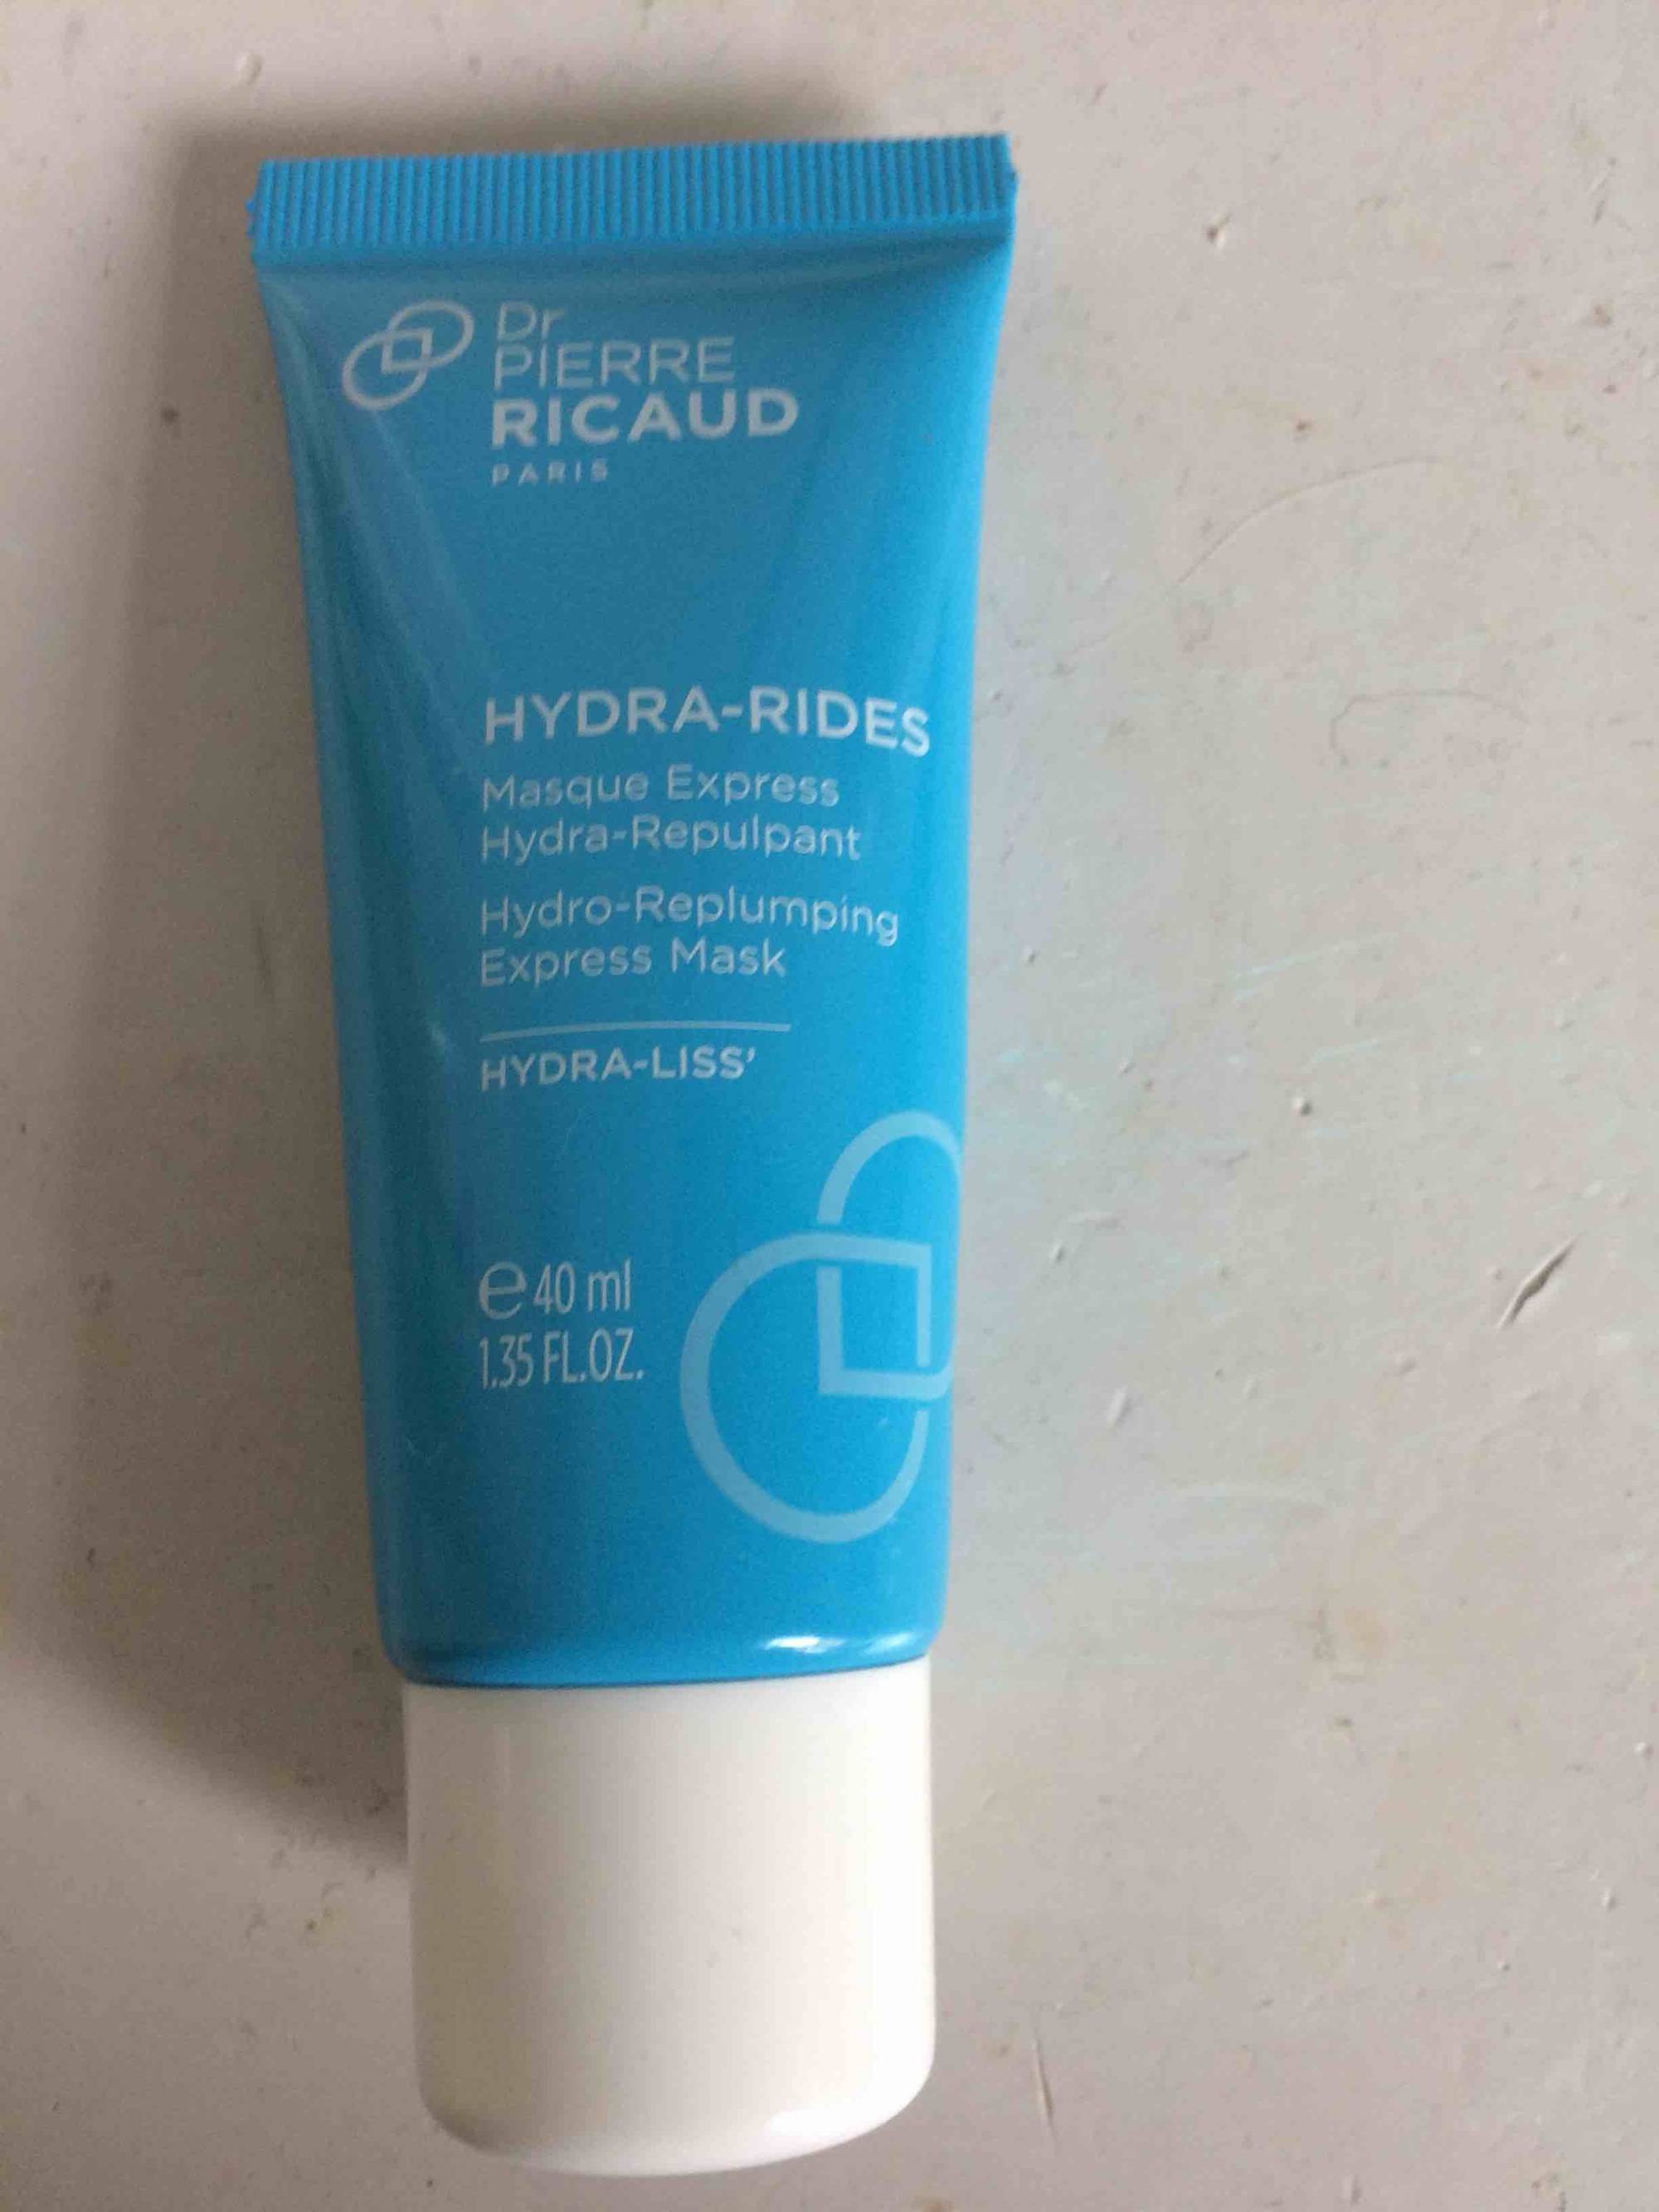 DR PIERRE RICAUD - Hydra-rides - Masque Express hydra-repulpant